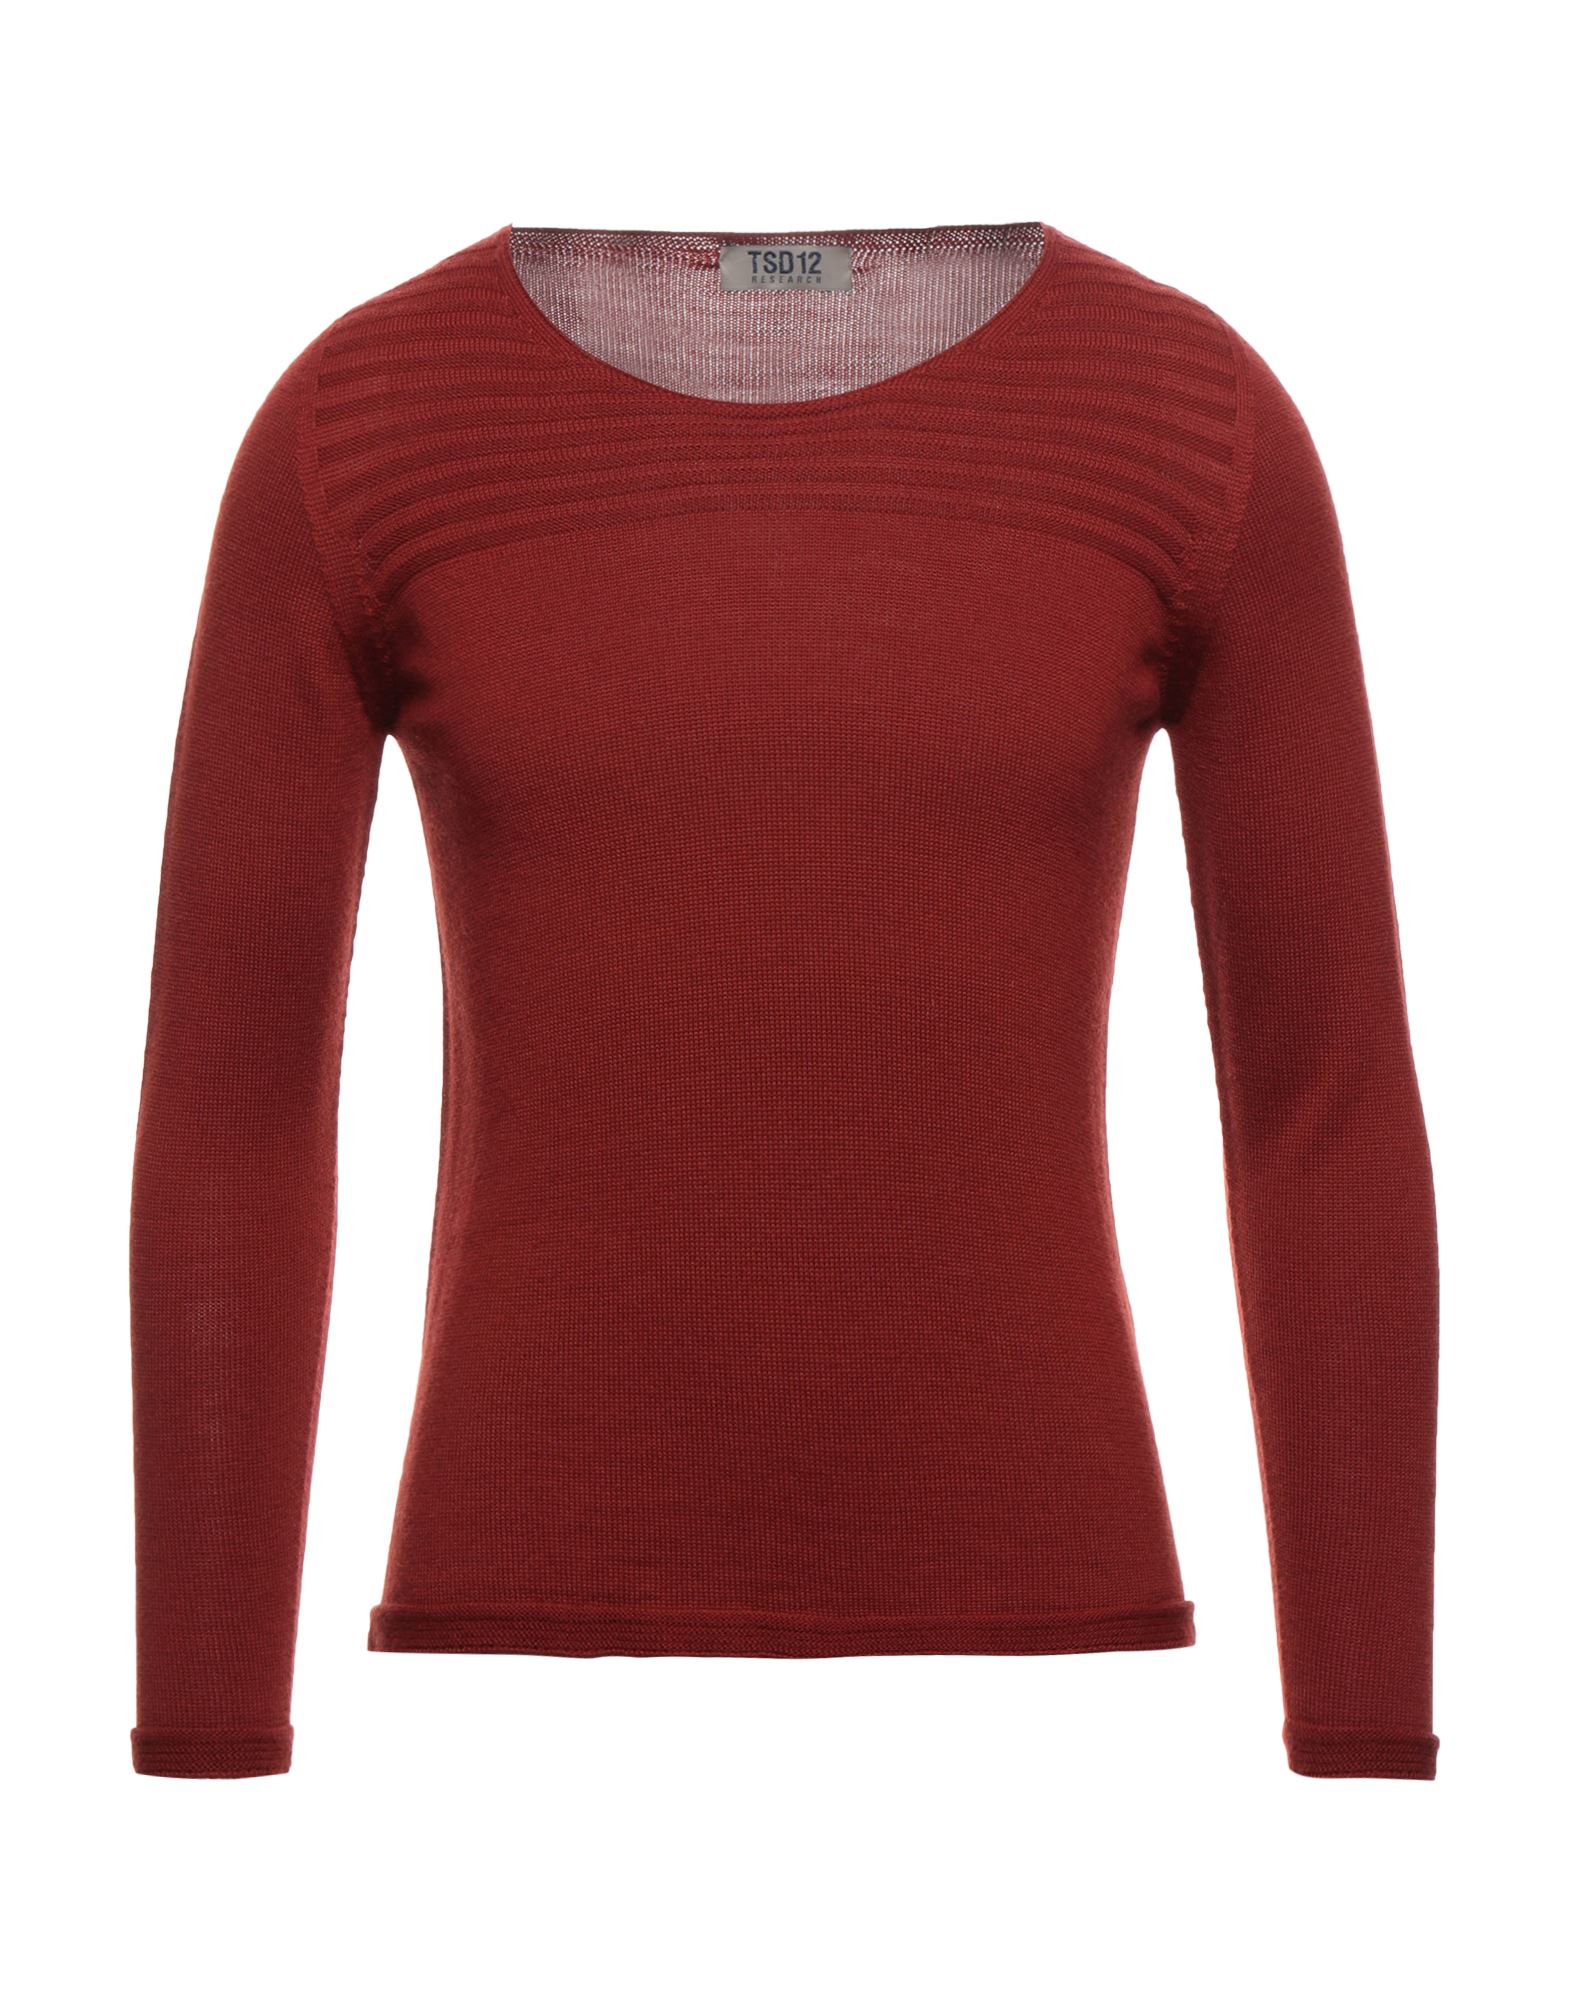 Tsd12 Man Sweater Brick Red Size Xxl Merino Wool, Acrylic